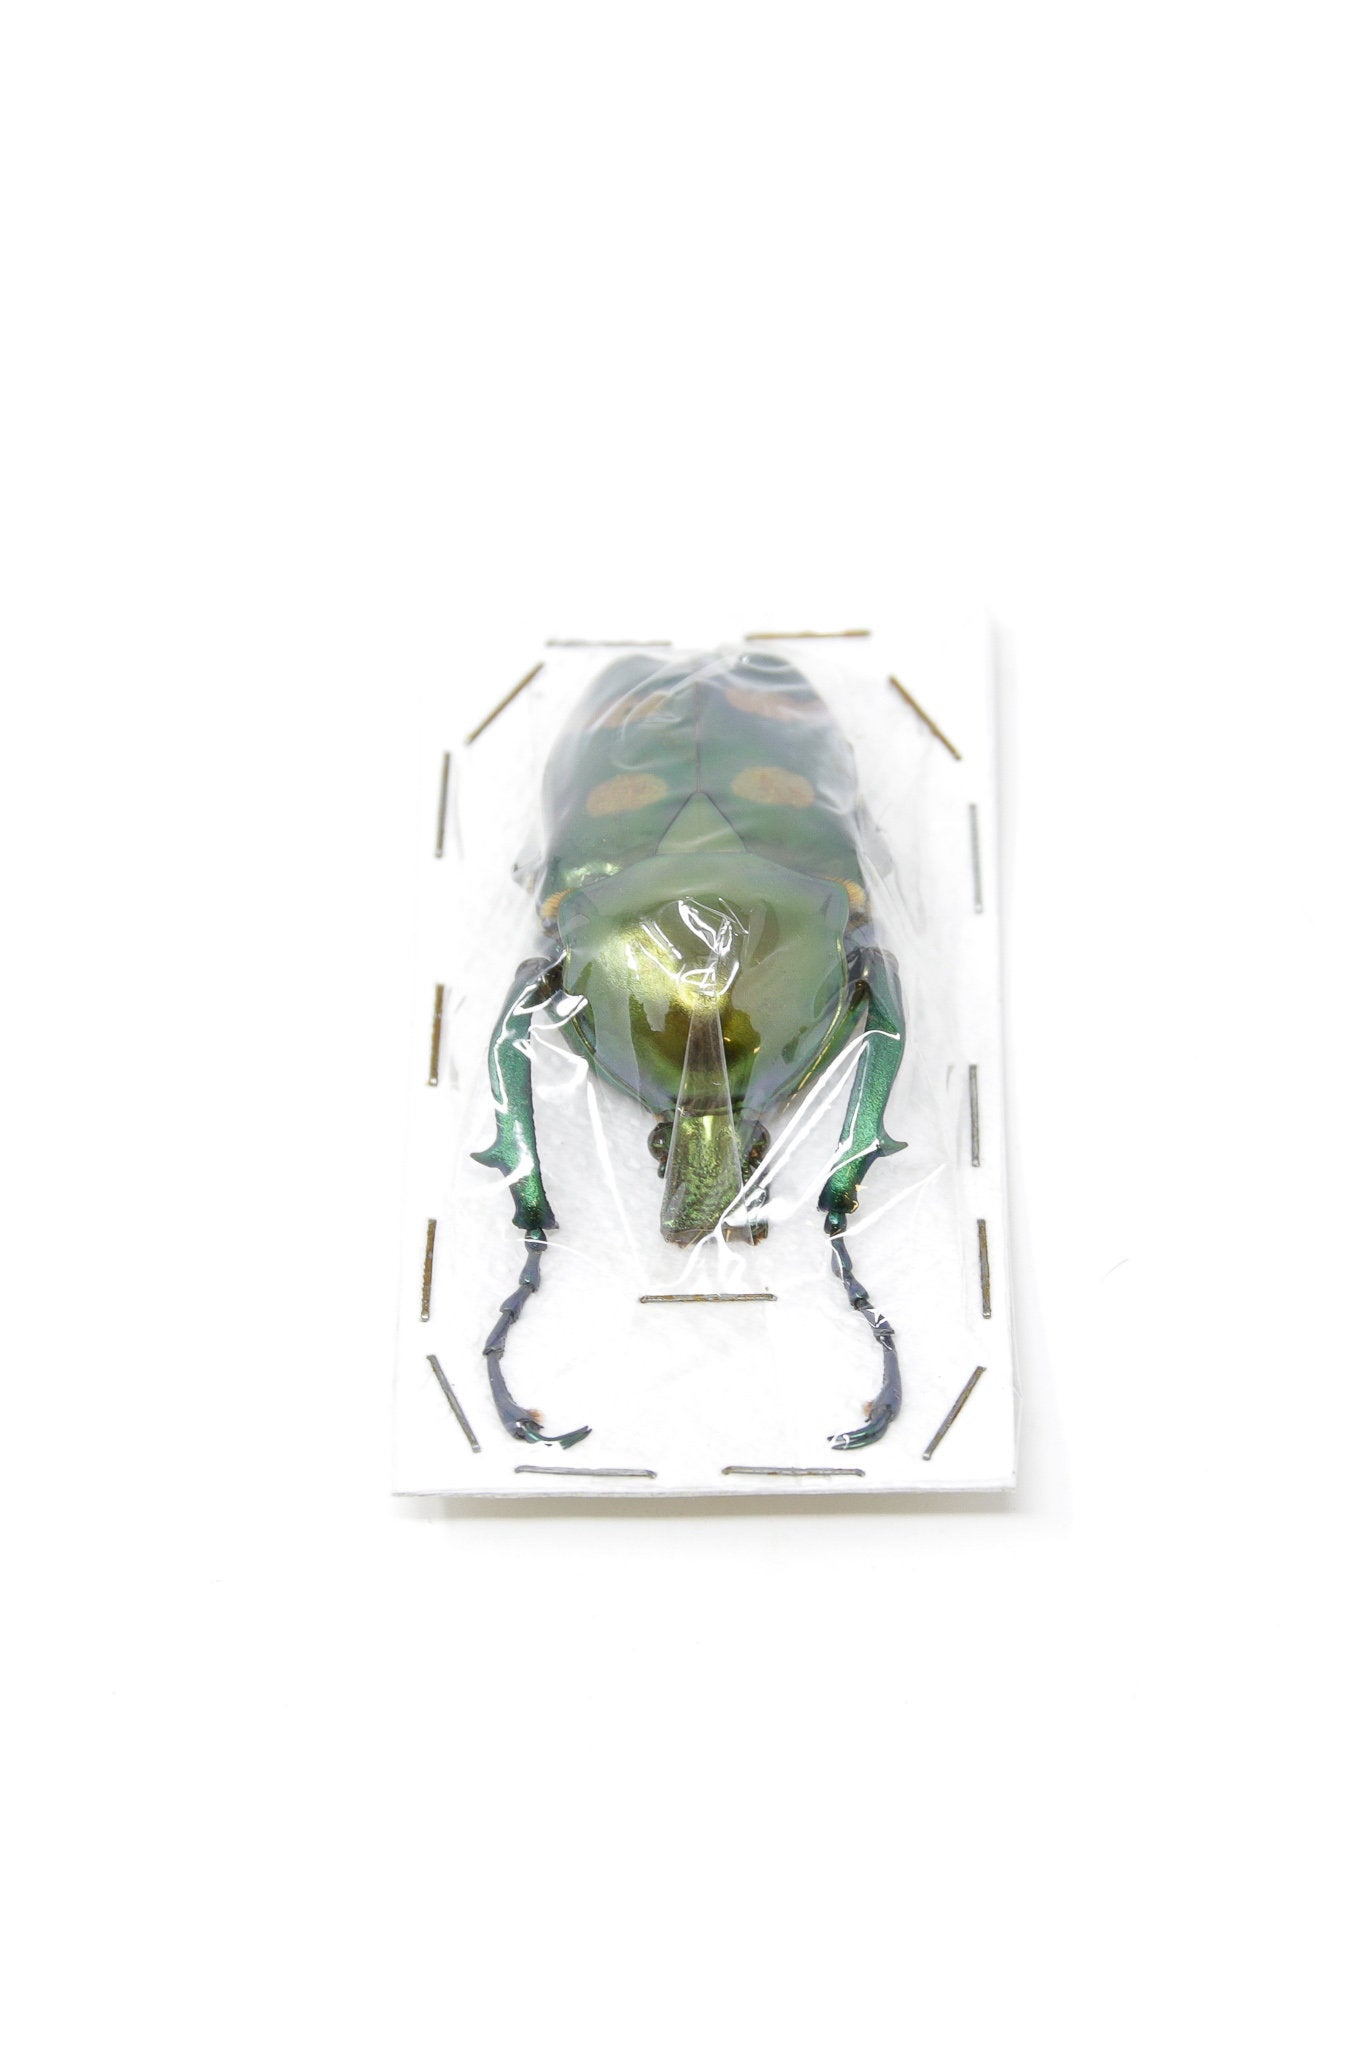 Jumnos ruckeri ruckeri 51mm A1 | Thailand Flower Beetle, Entomology Specimen